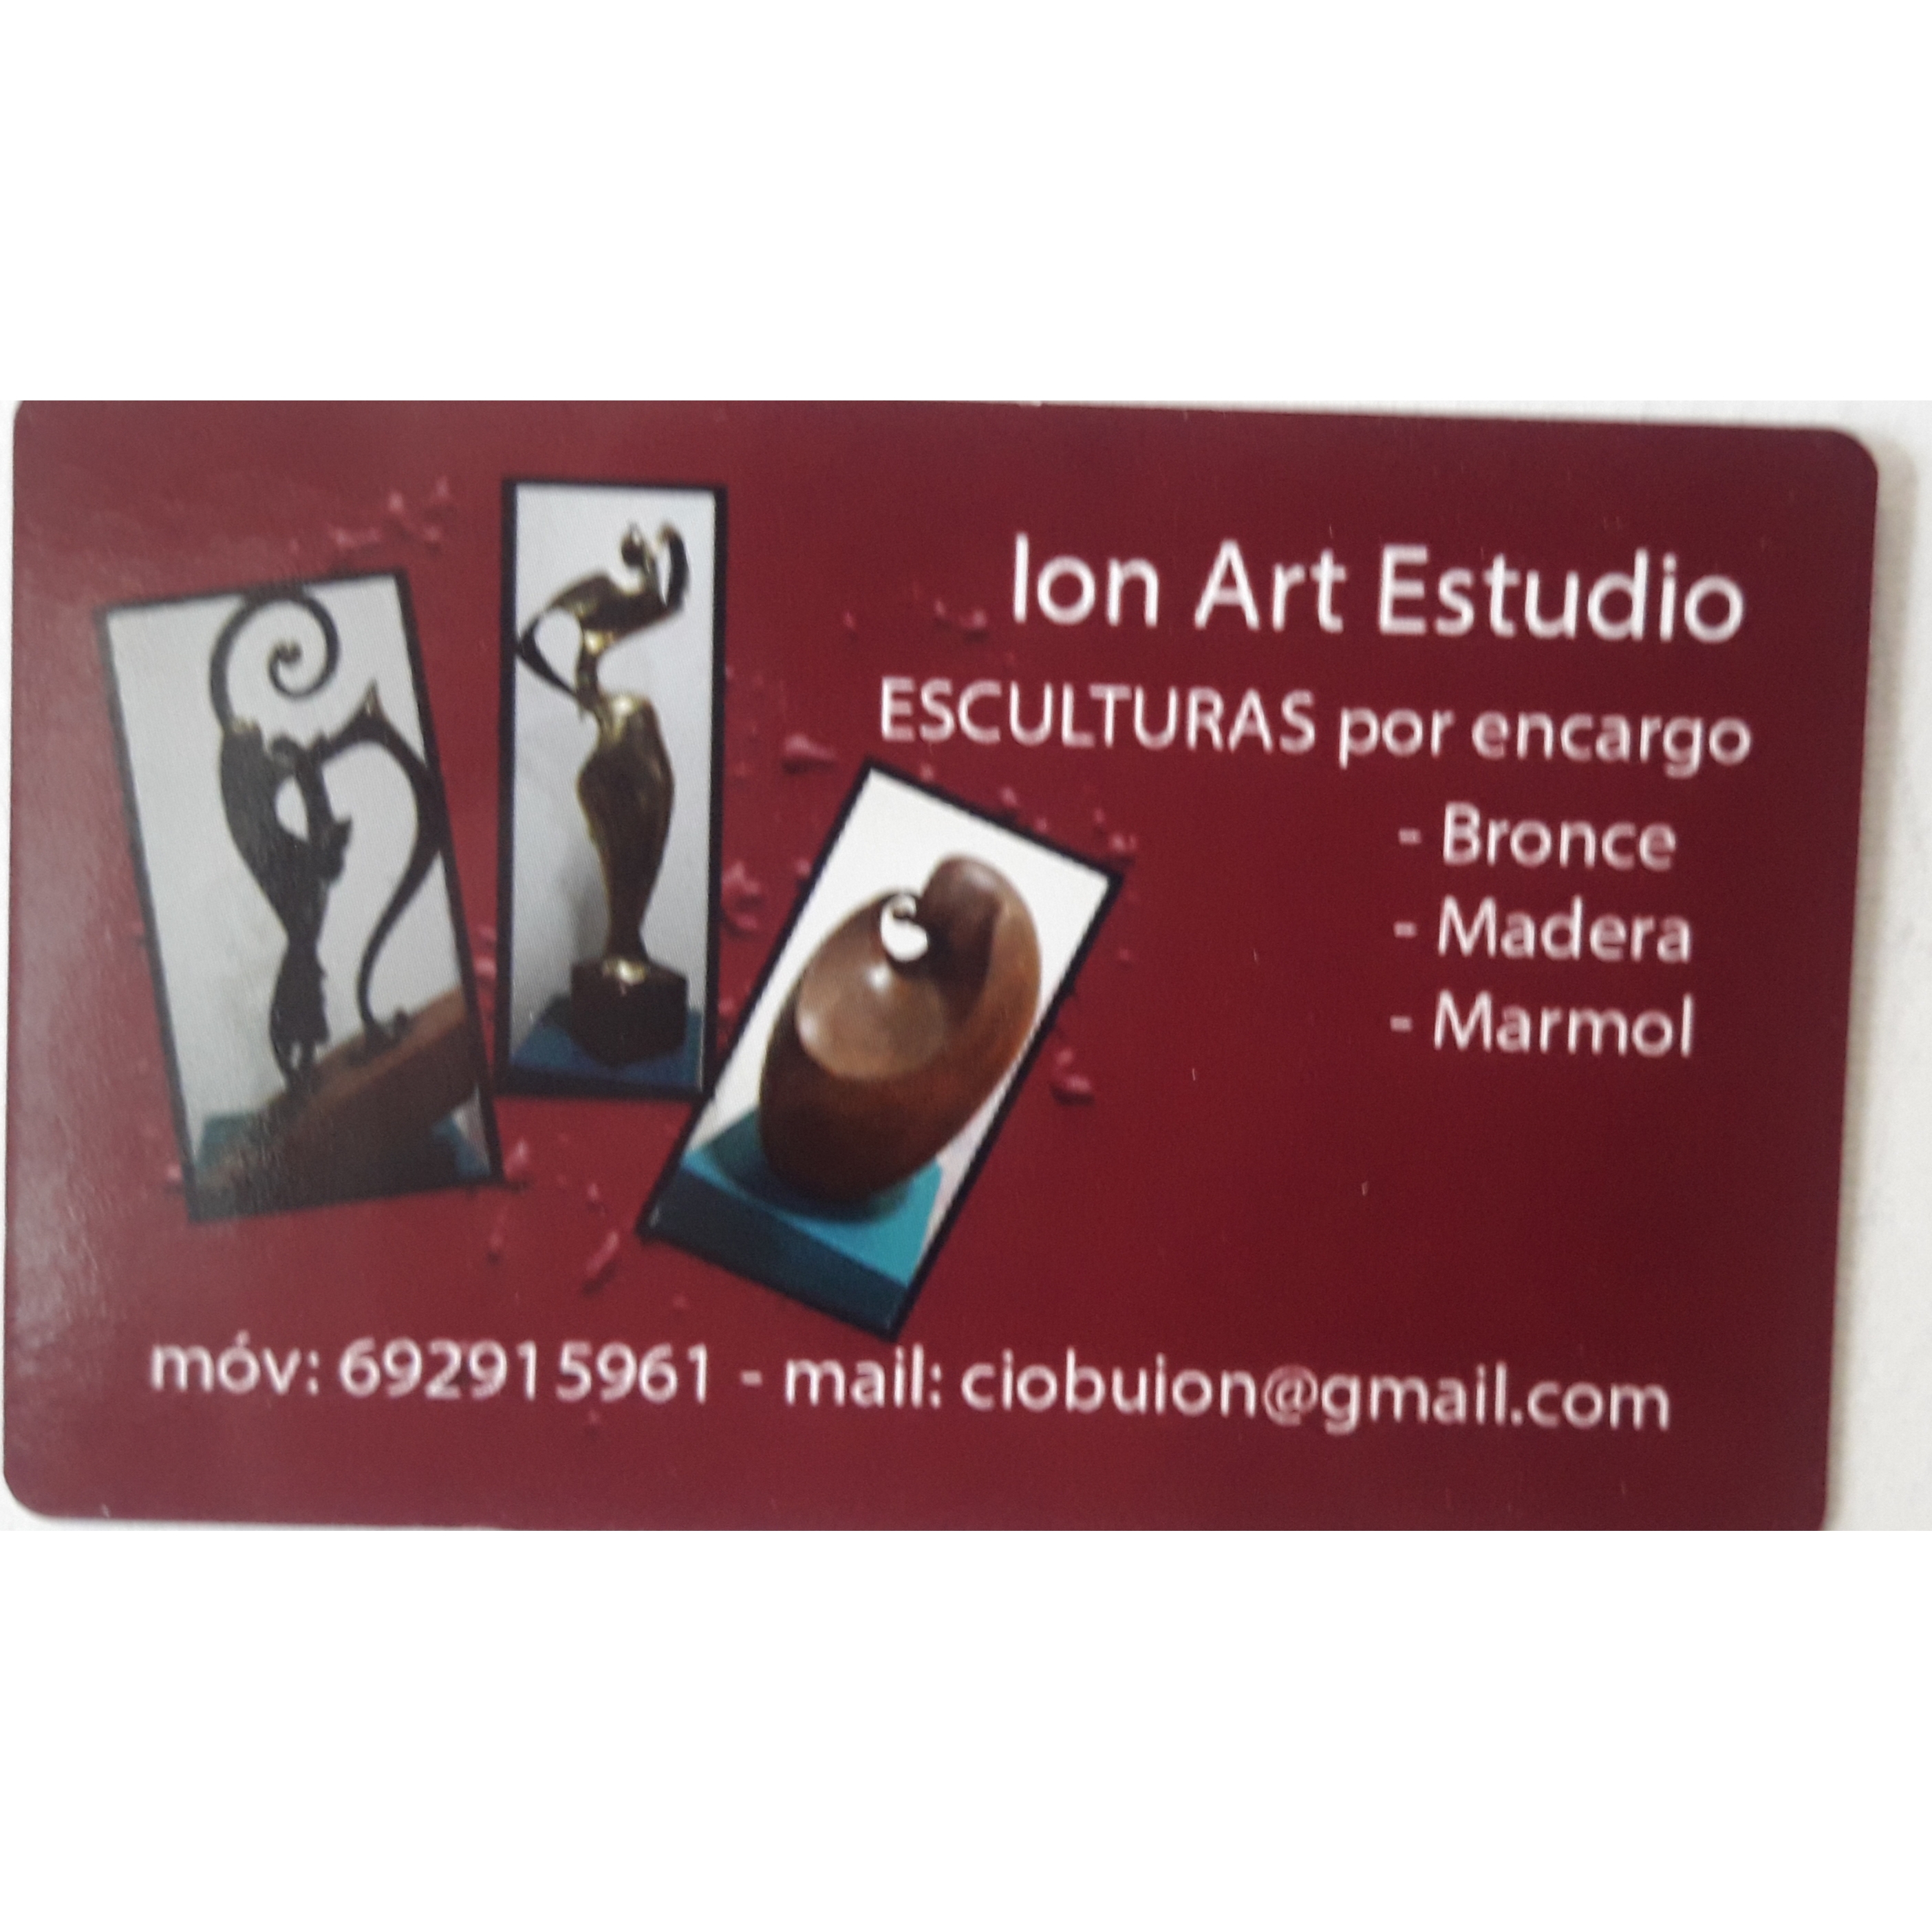 Ion Art Estudio Alcorcón